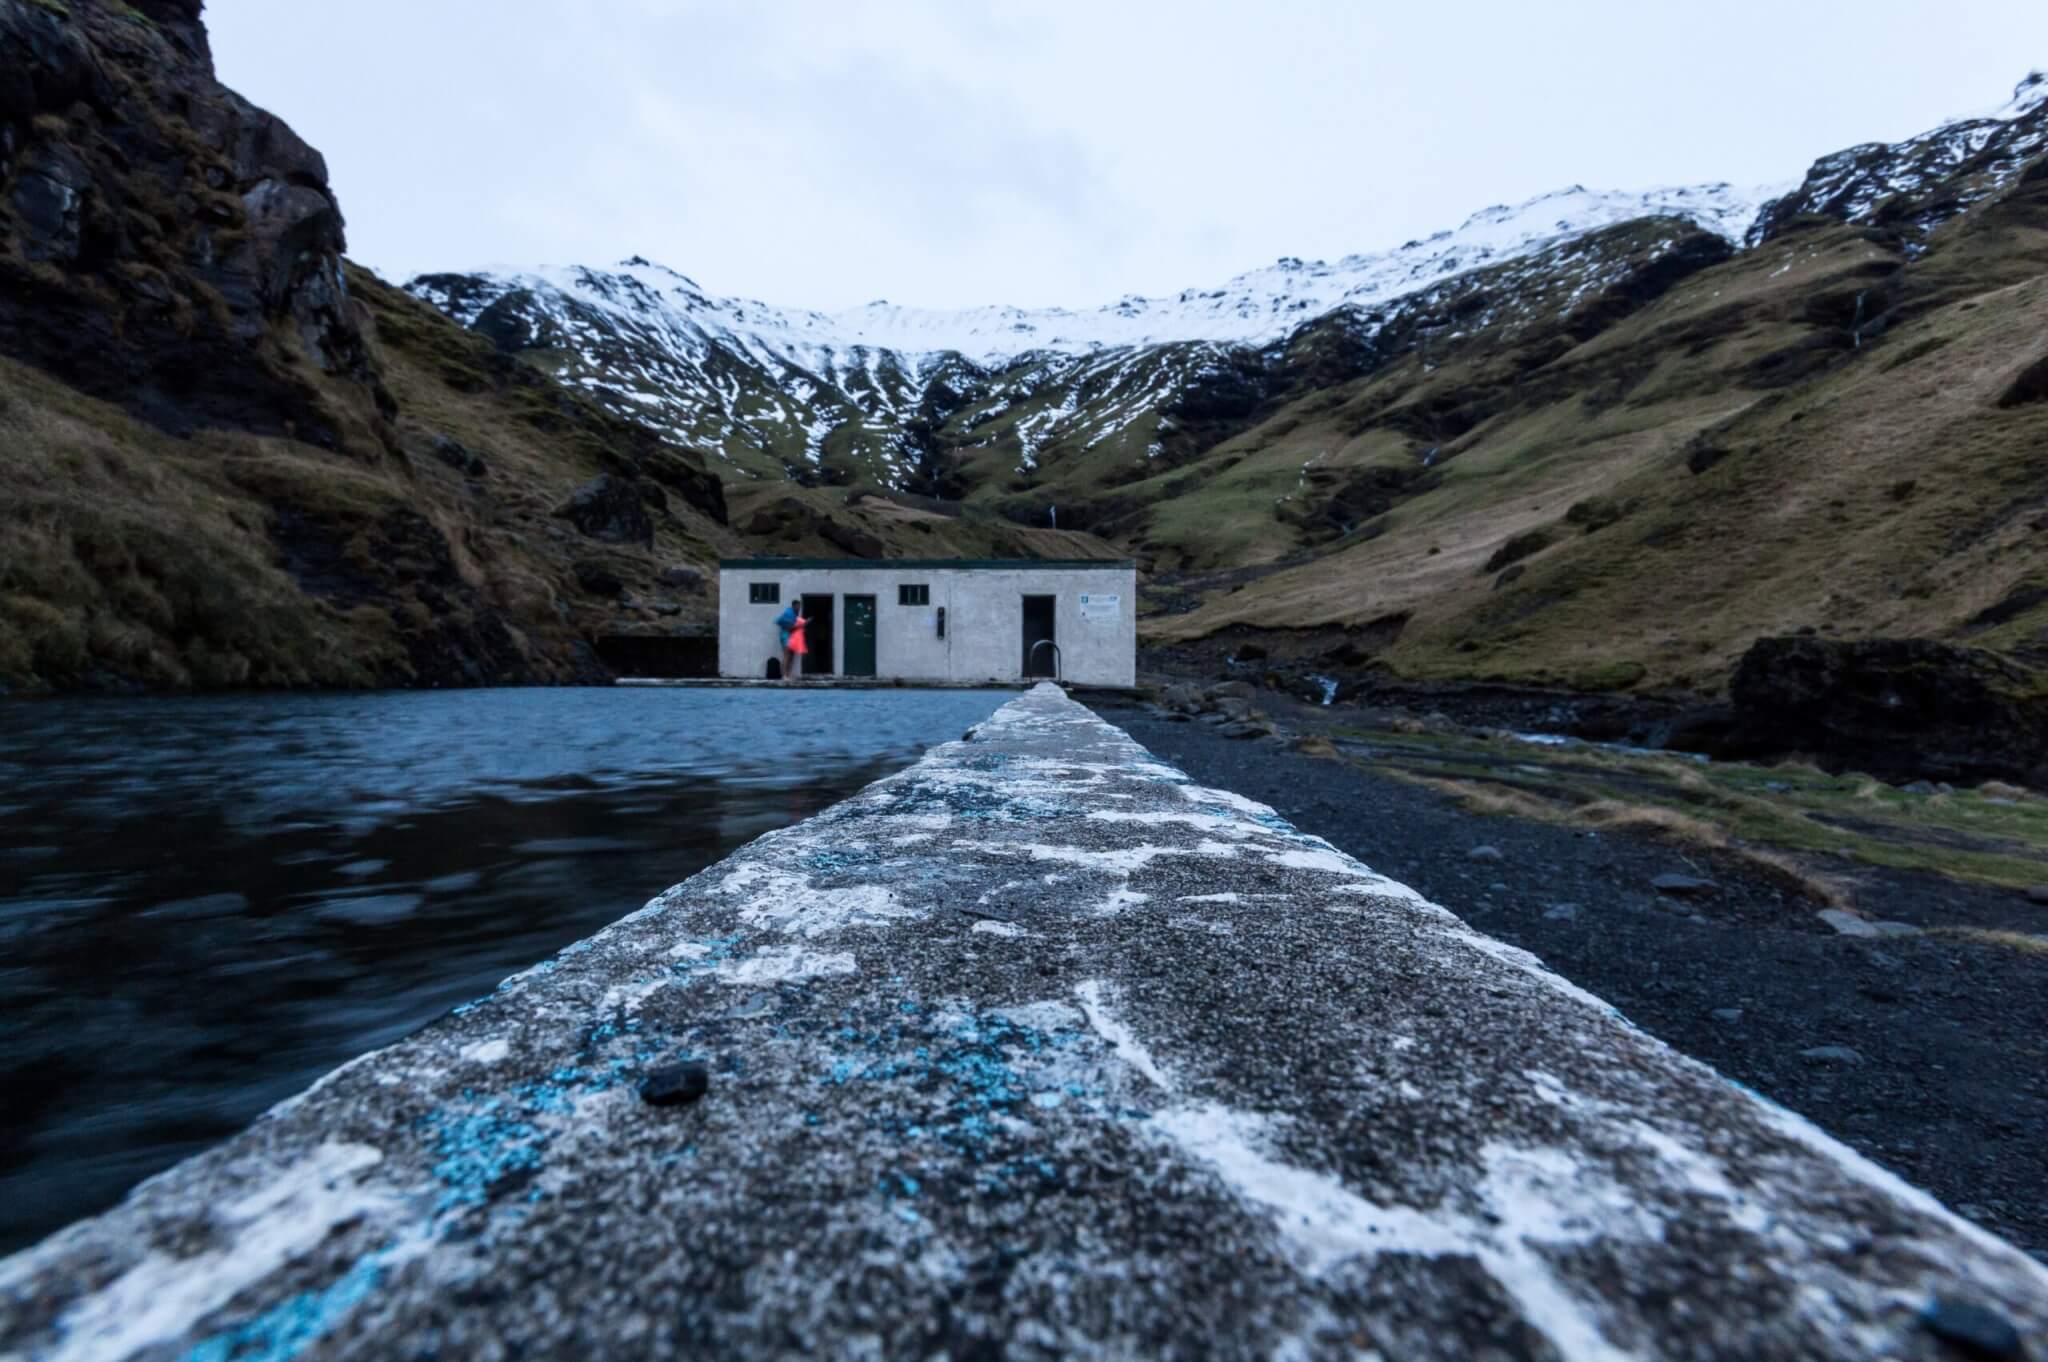 Seljavallalaug Swimming Pool in Iceland